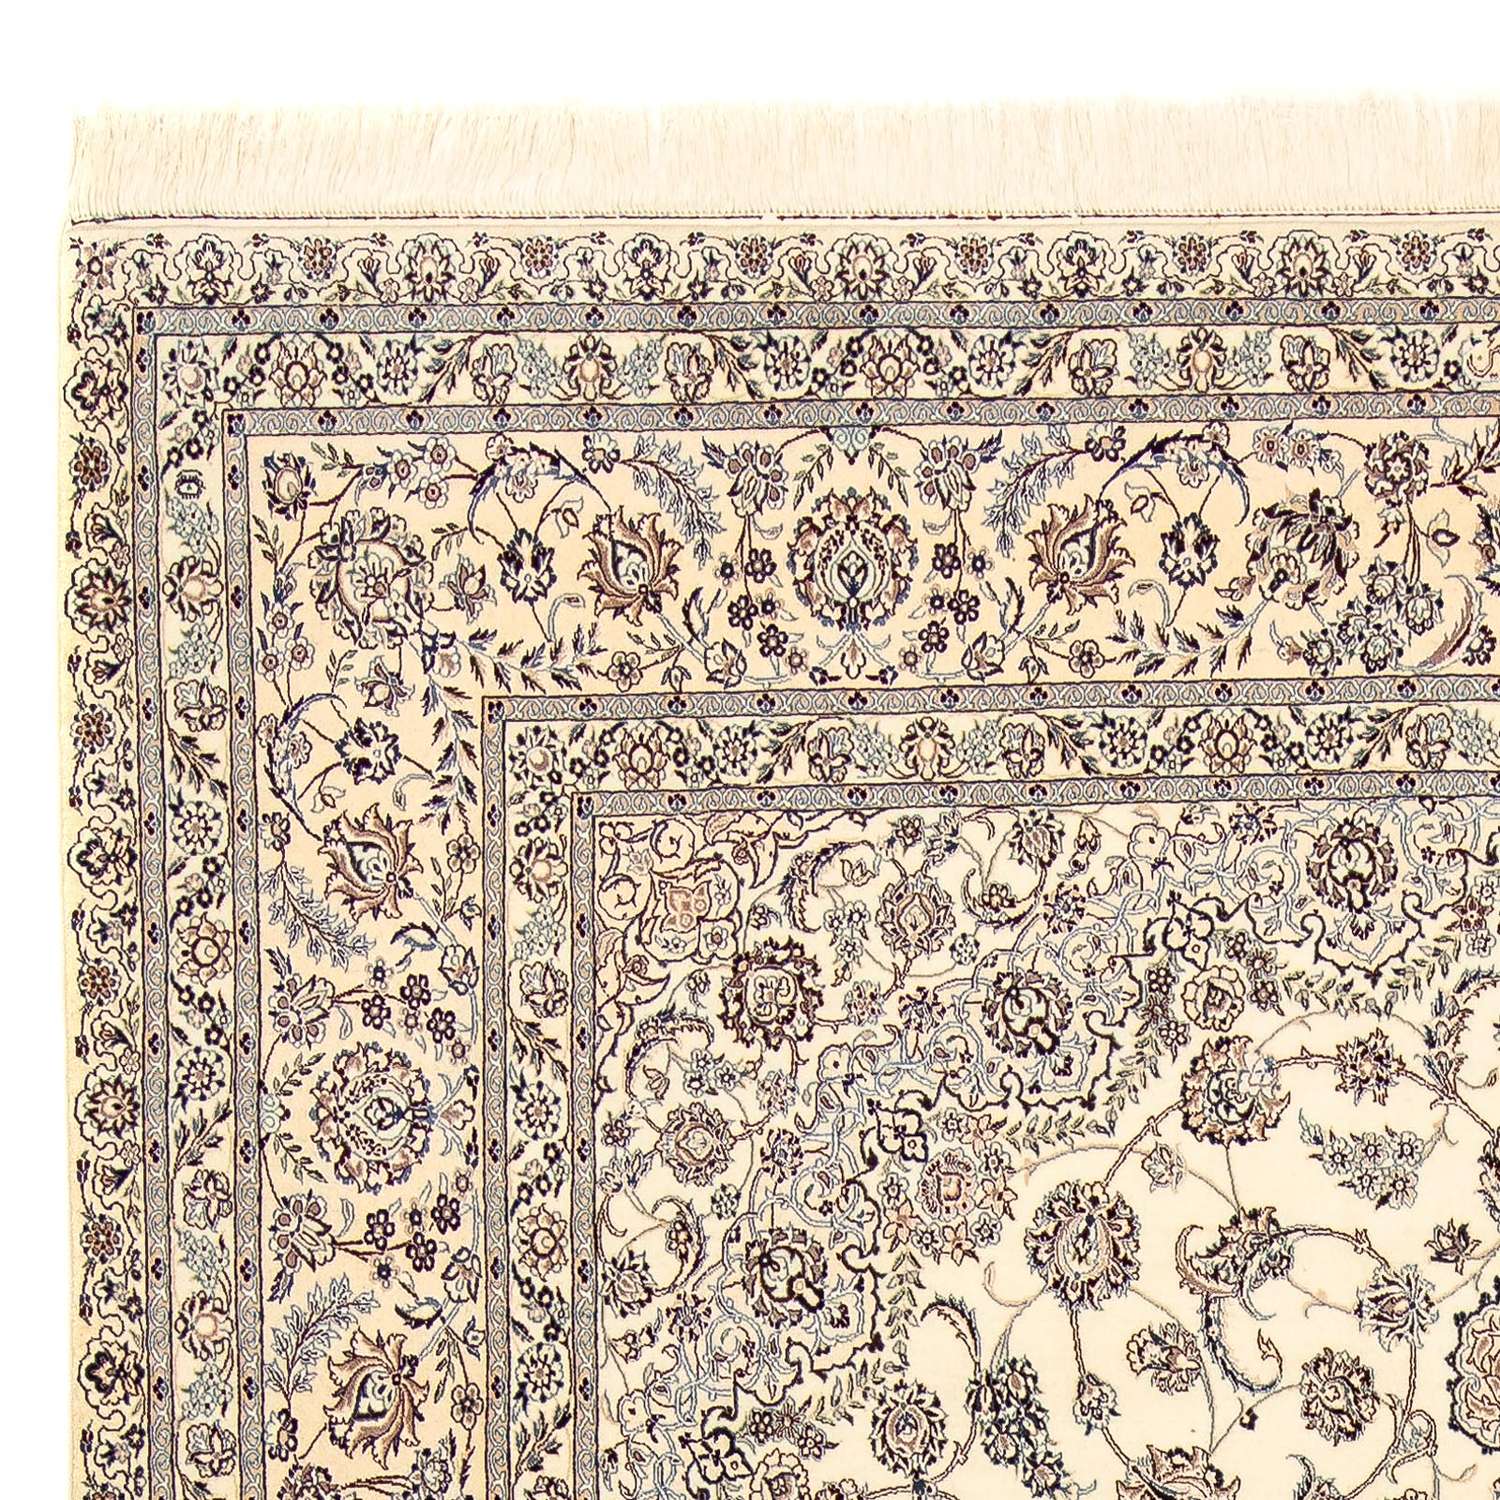 Persisk tæppe - Nain - Premium - 330 x 255 cm - beige